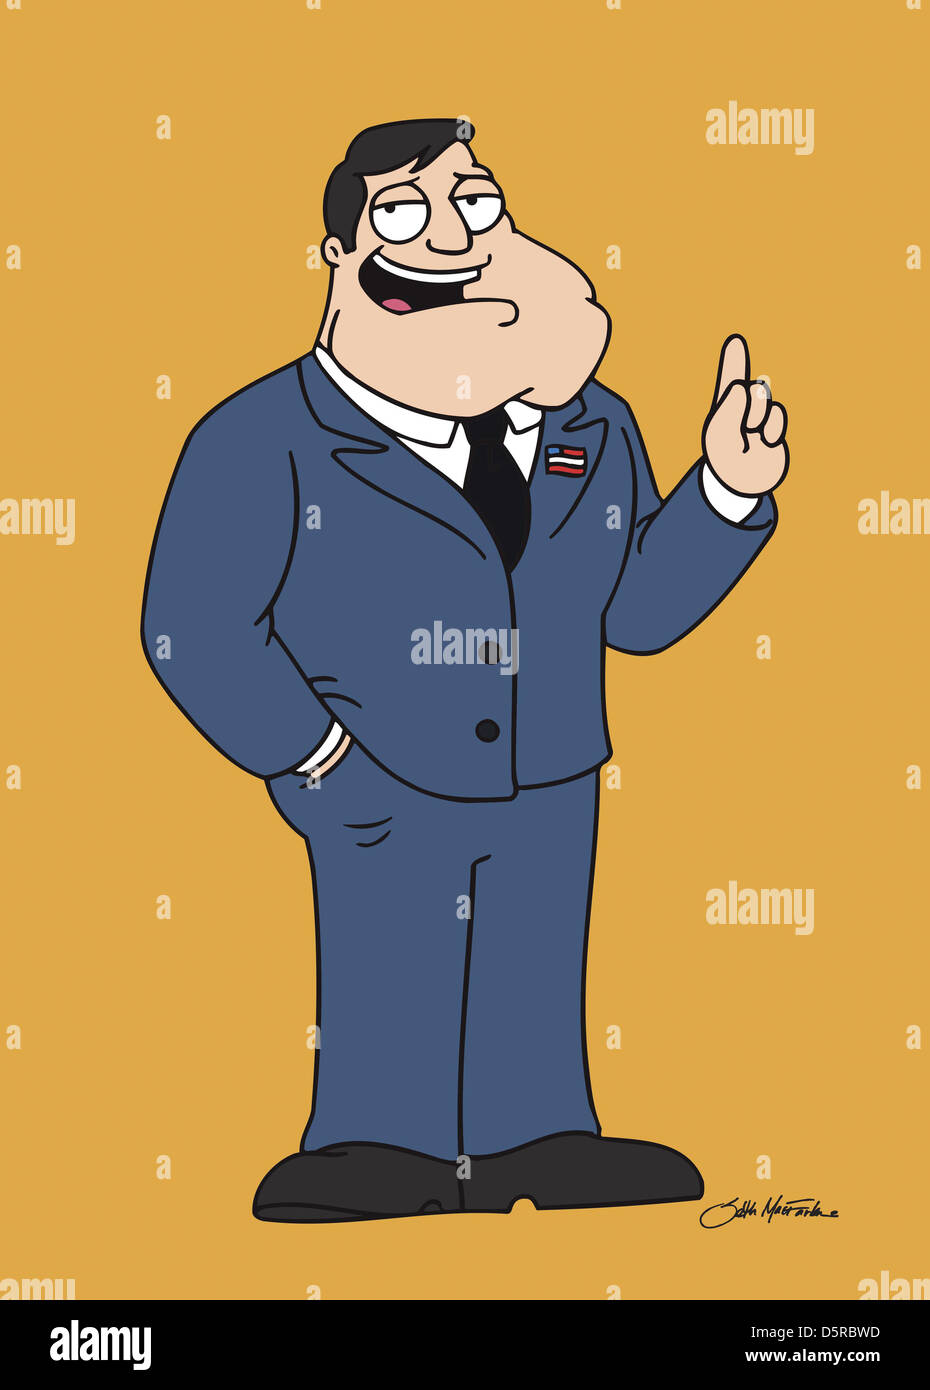 STAN SMITH AMERICAN DAD! (2005 Stock Photo - Alamy